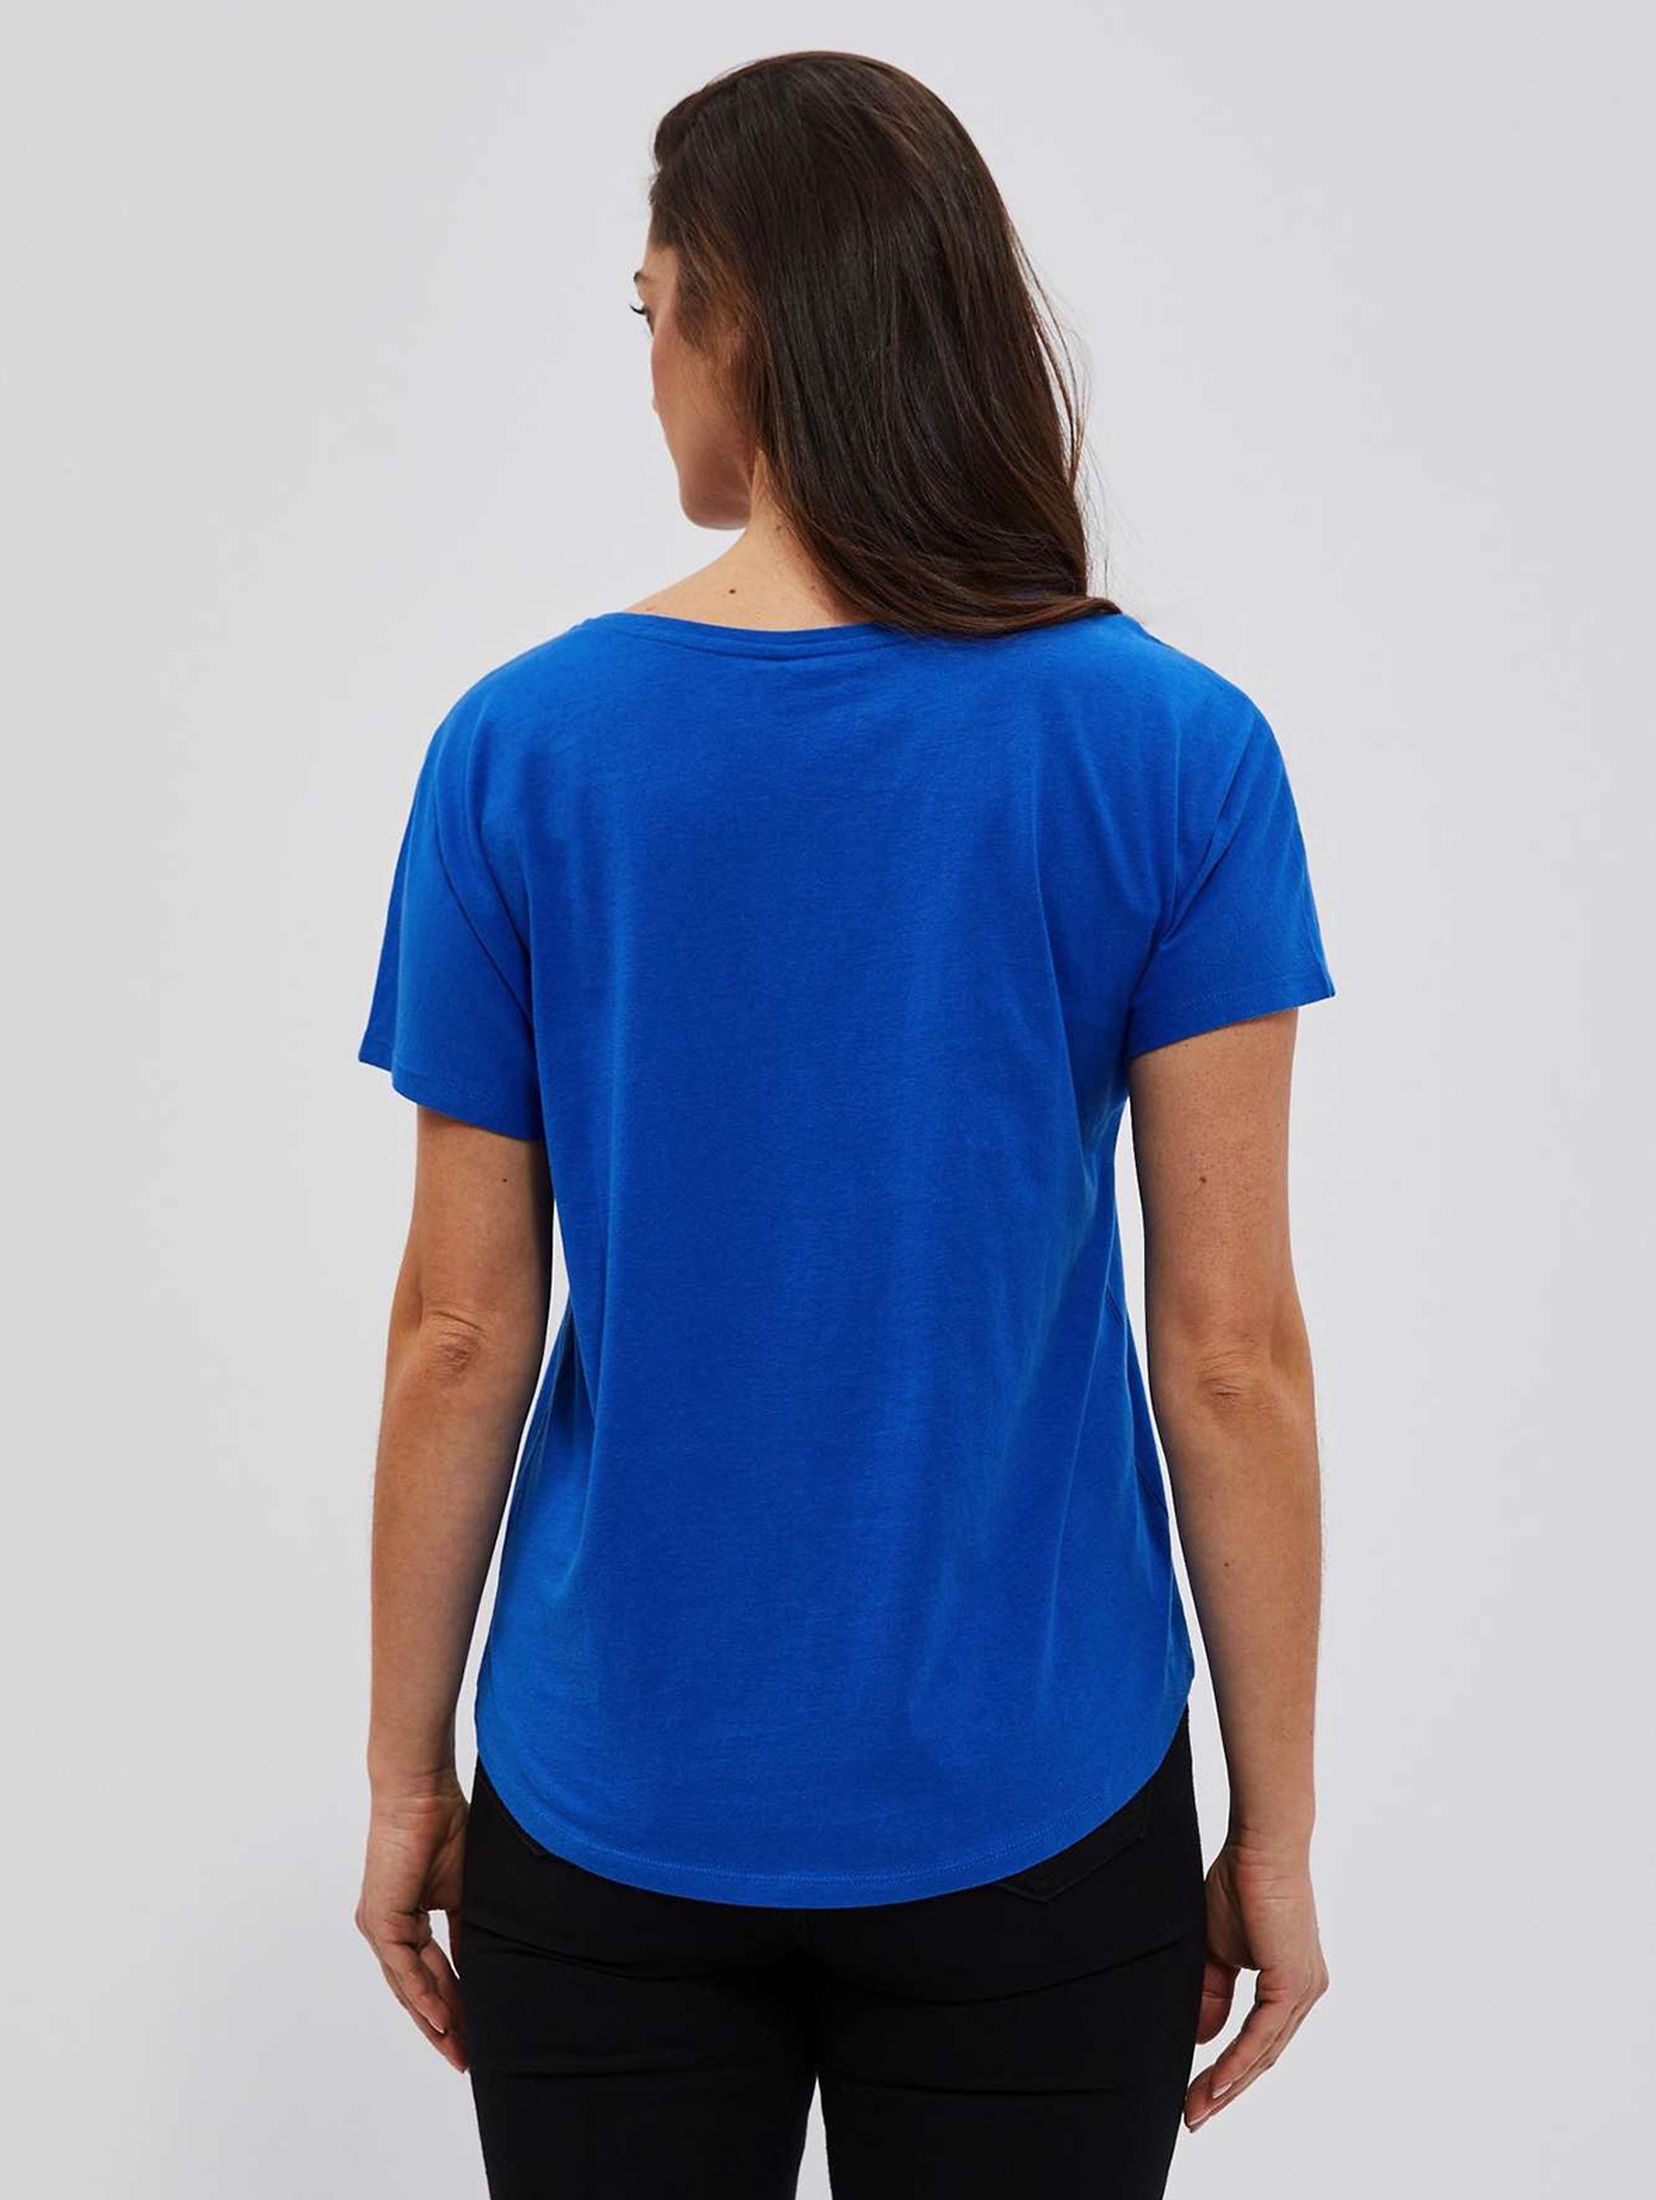 Koszulka damska z nadrukiem niebieska